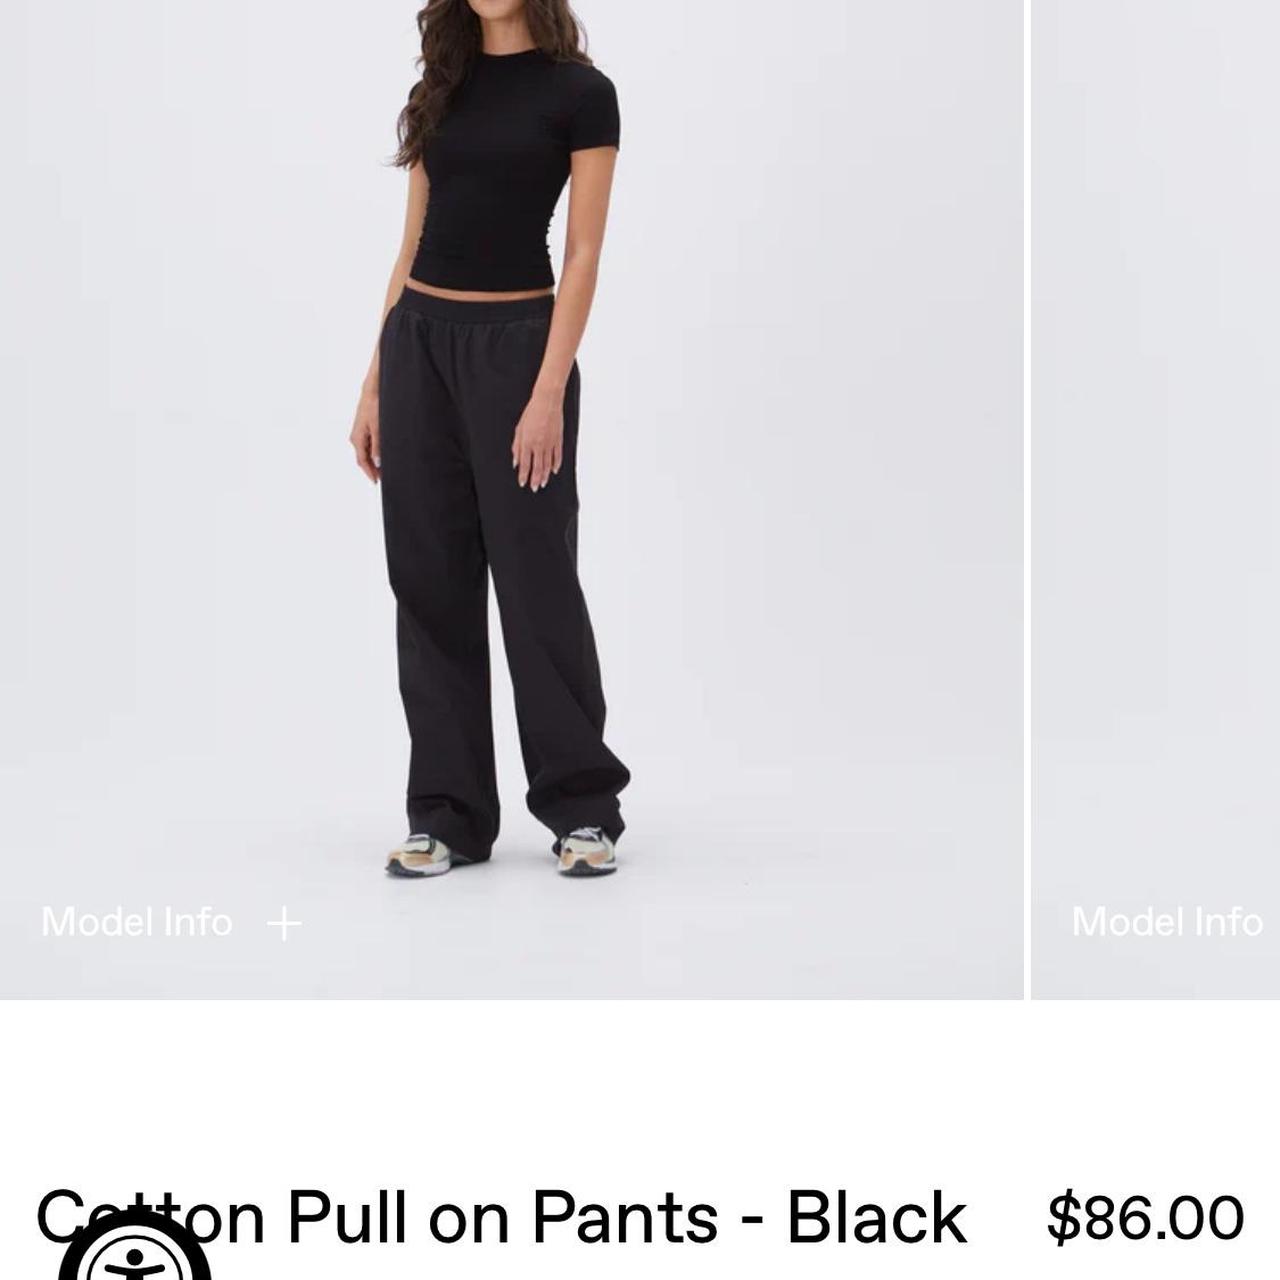 Cotton Pull on Pants - Black